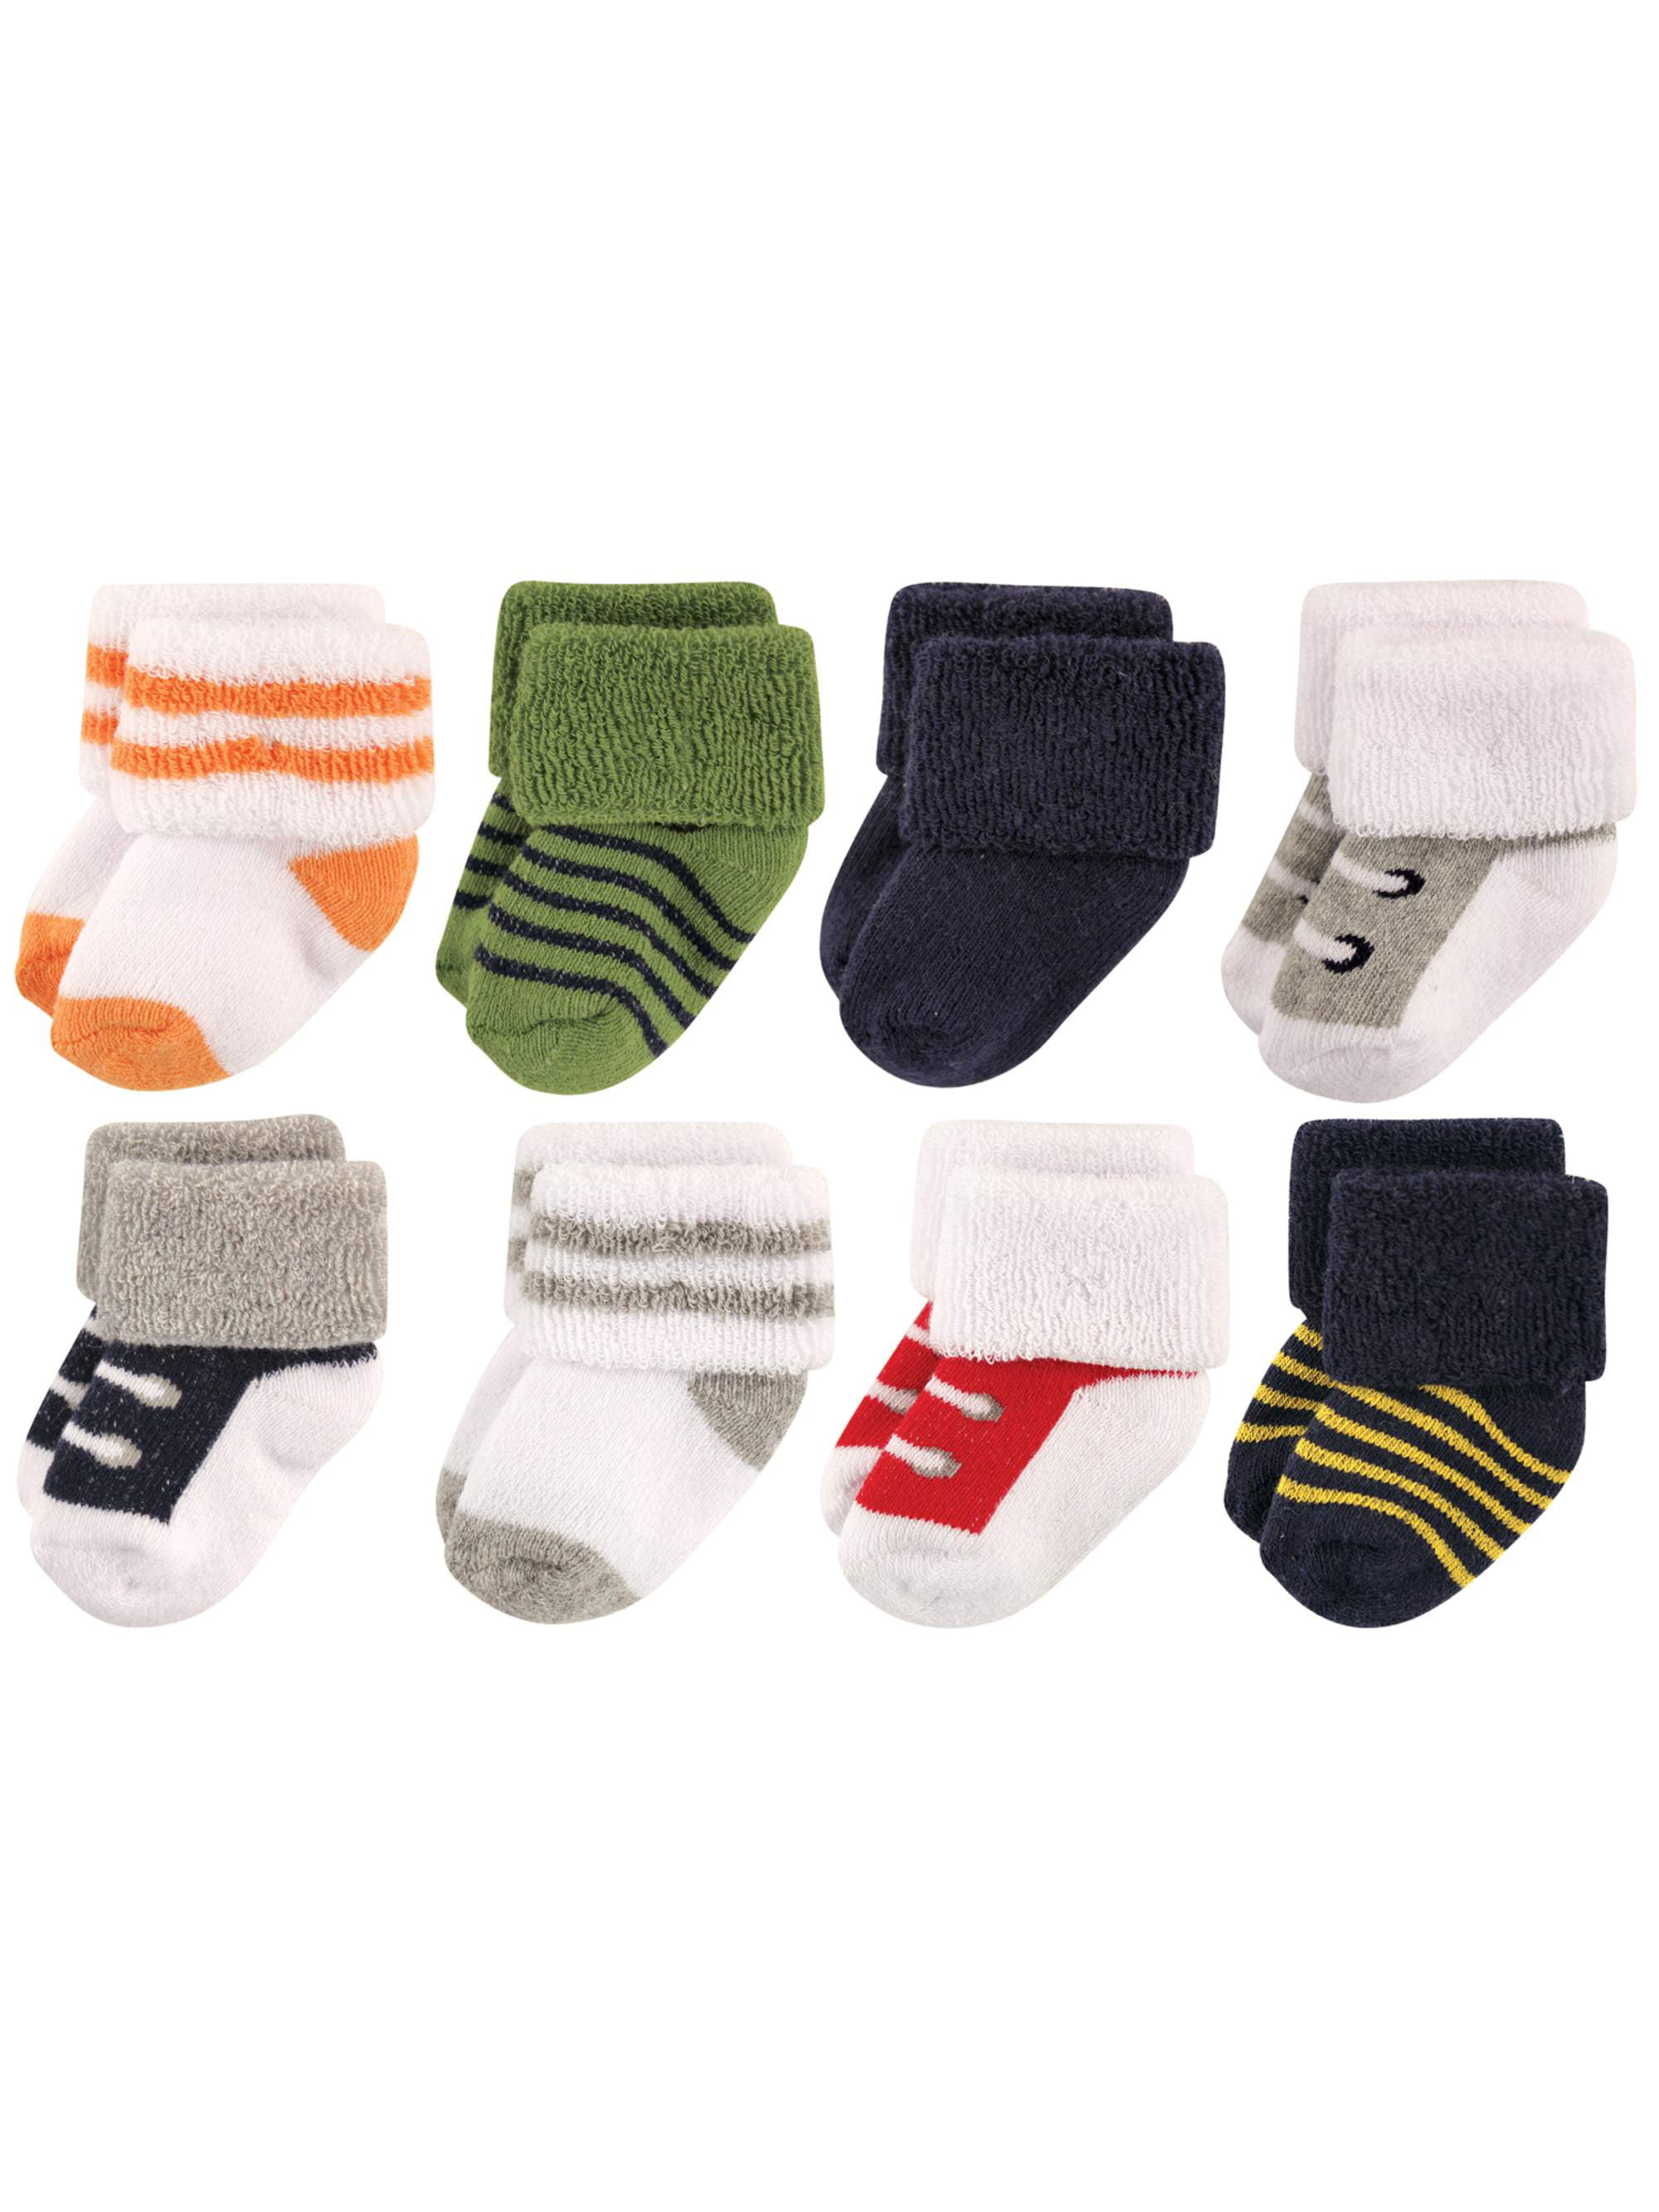 Luvable Friends - Socks, 8-pack (Baby Boys) - Walmart.com - Walmart.com